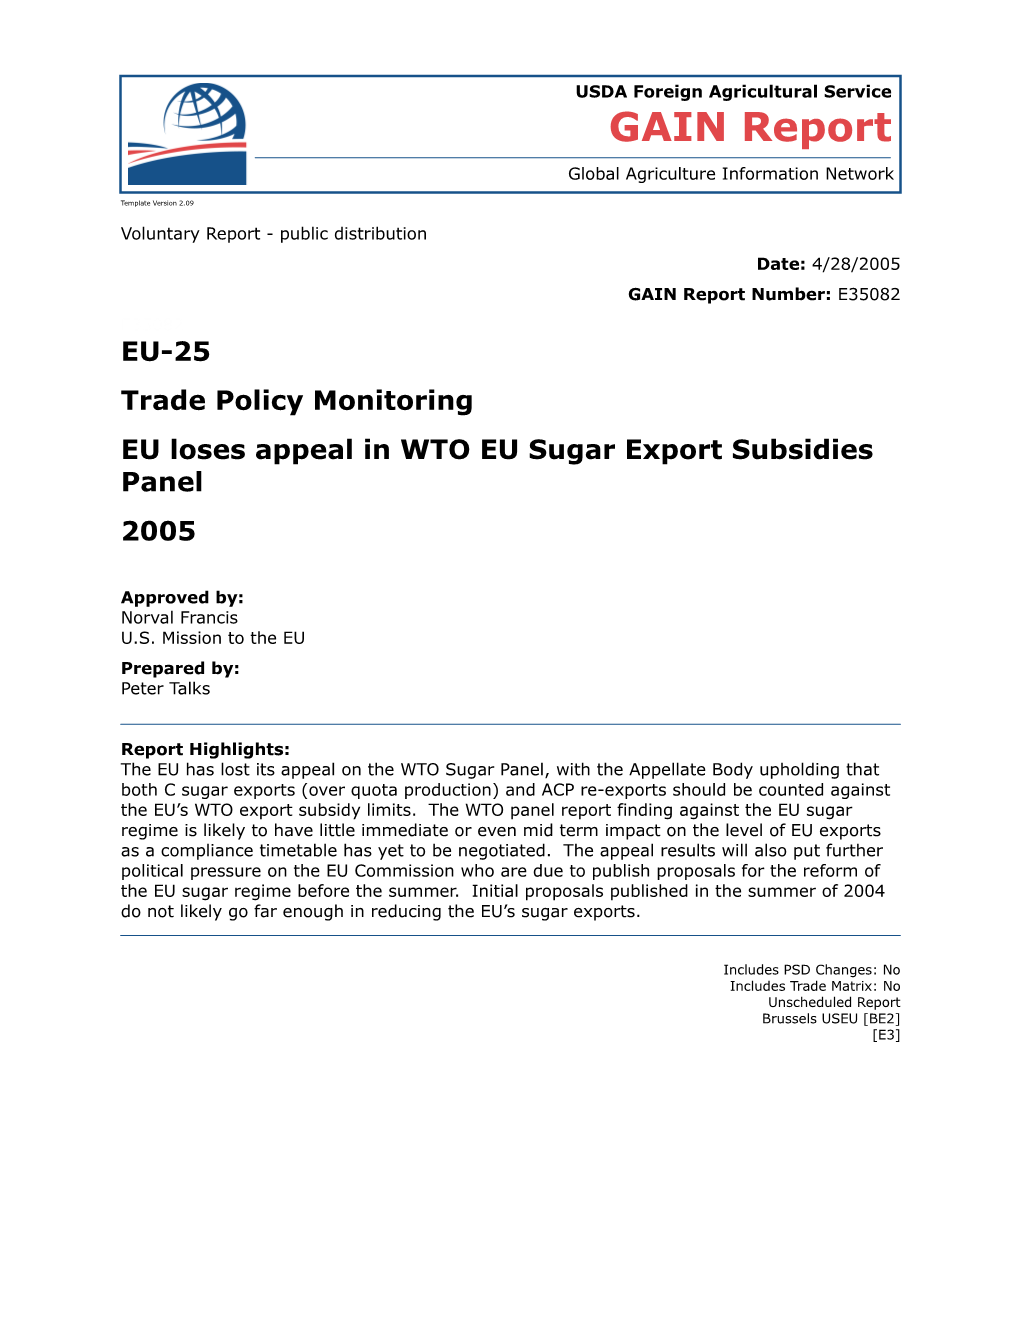 EU Loses Appeal in WTO EU Sugar Export Subsidies Panel